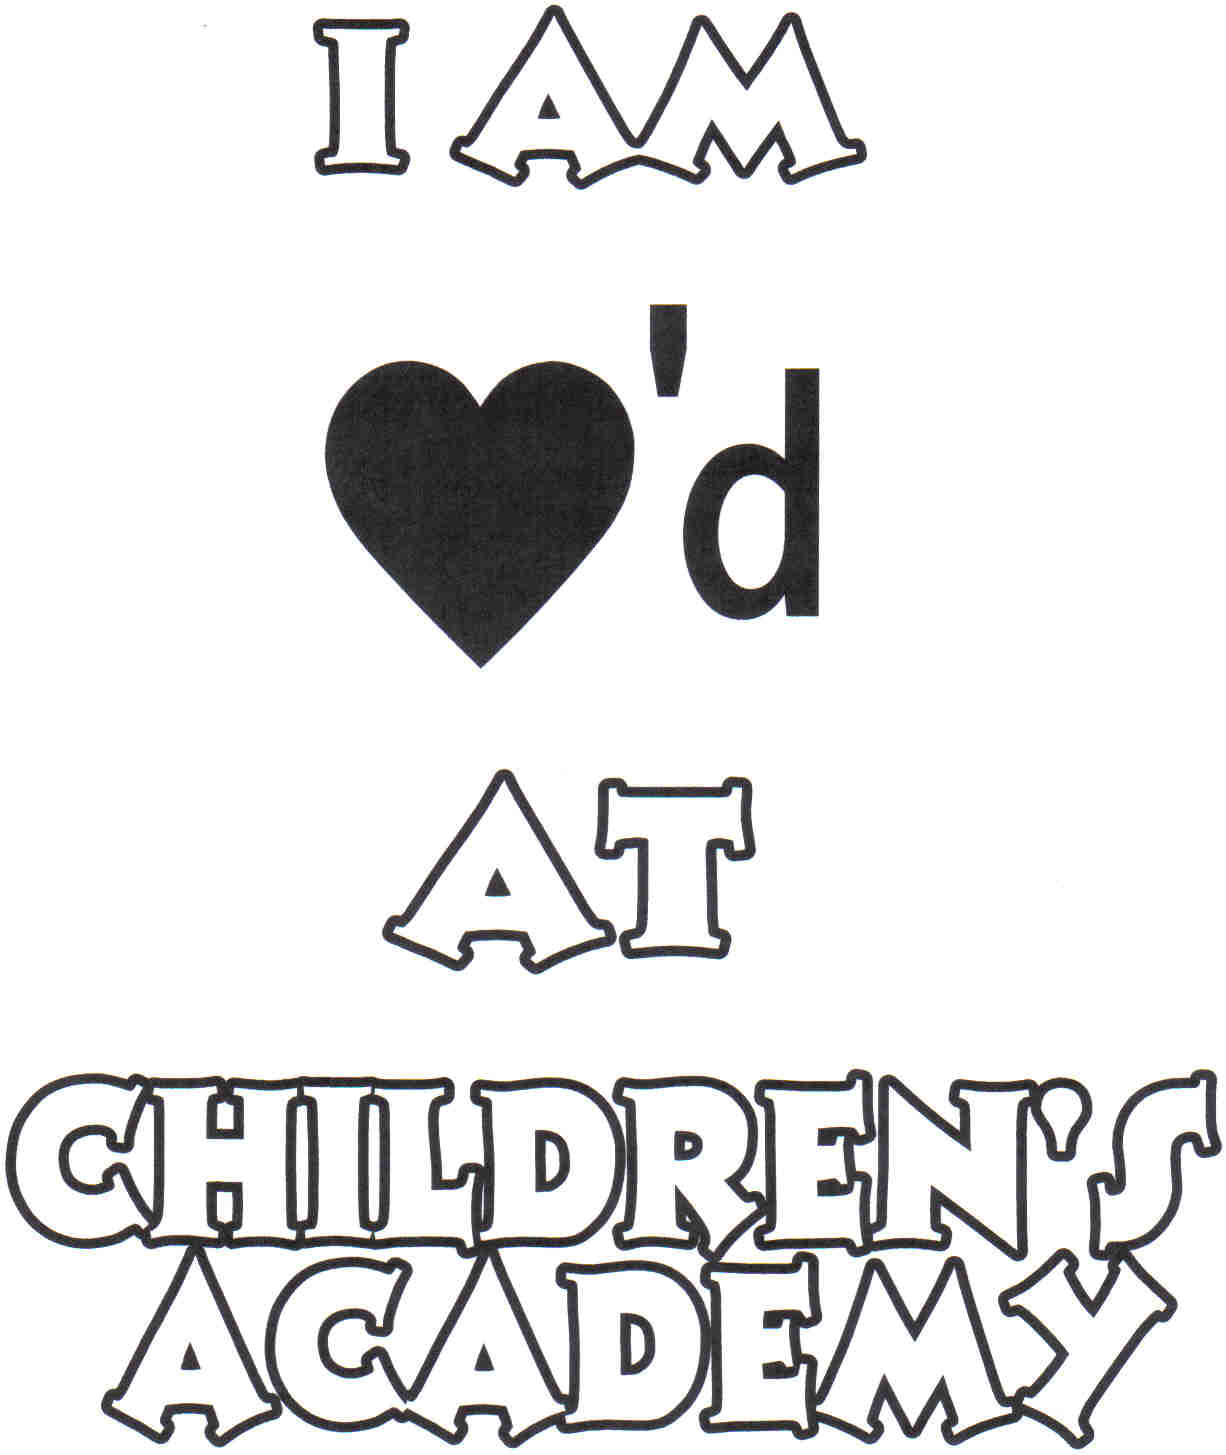 I am loved at Children's Academy!